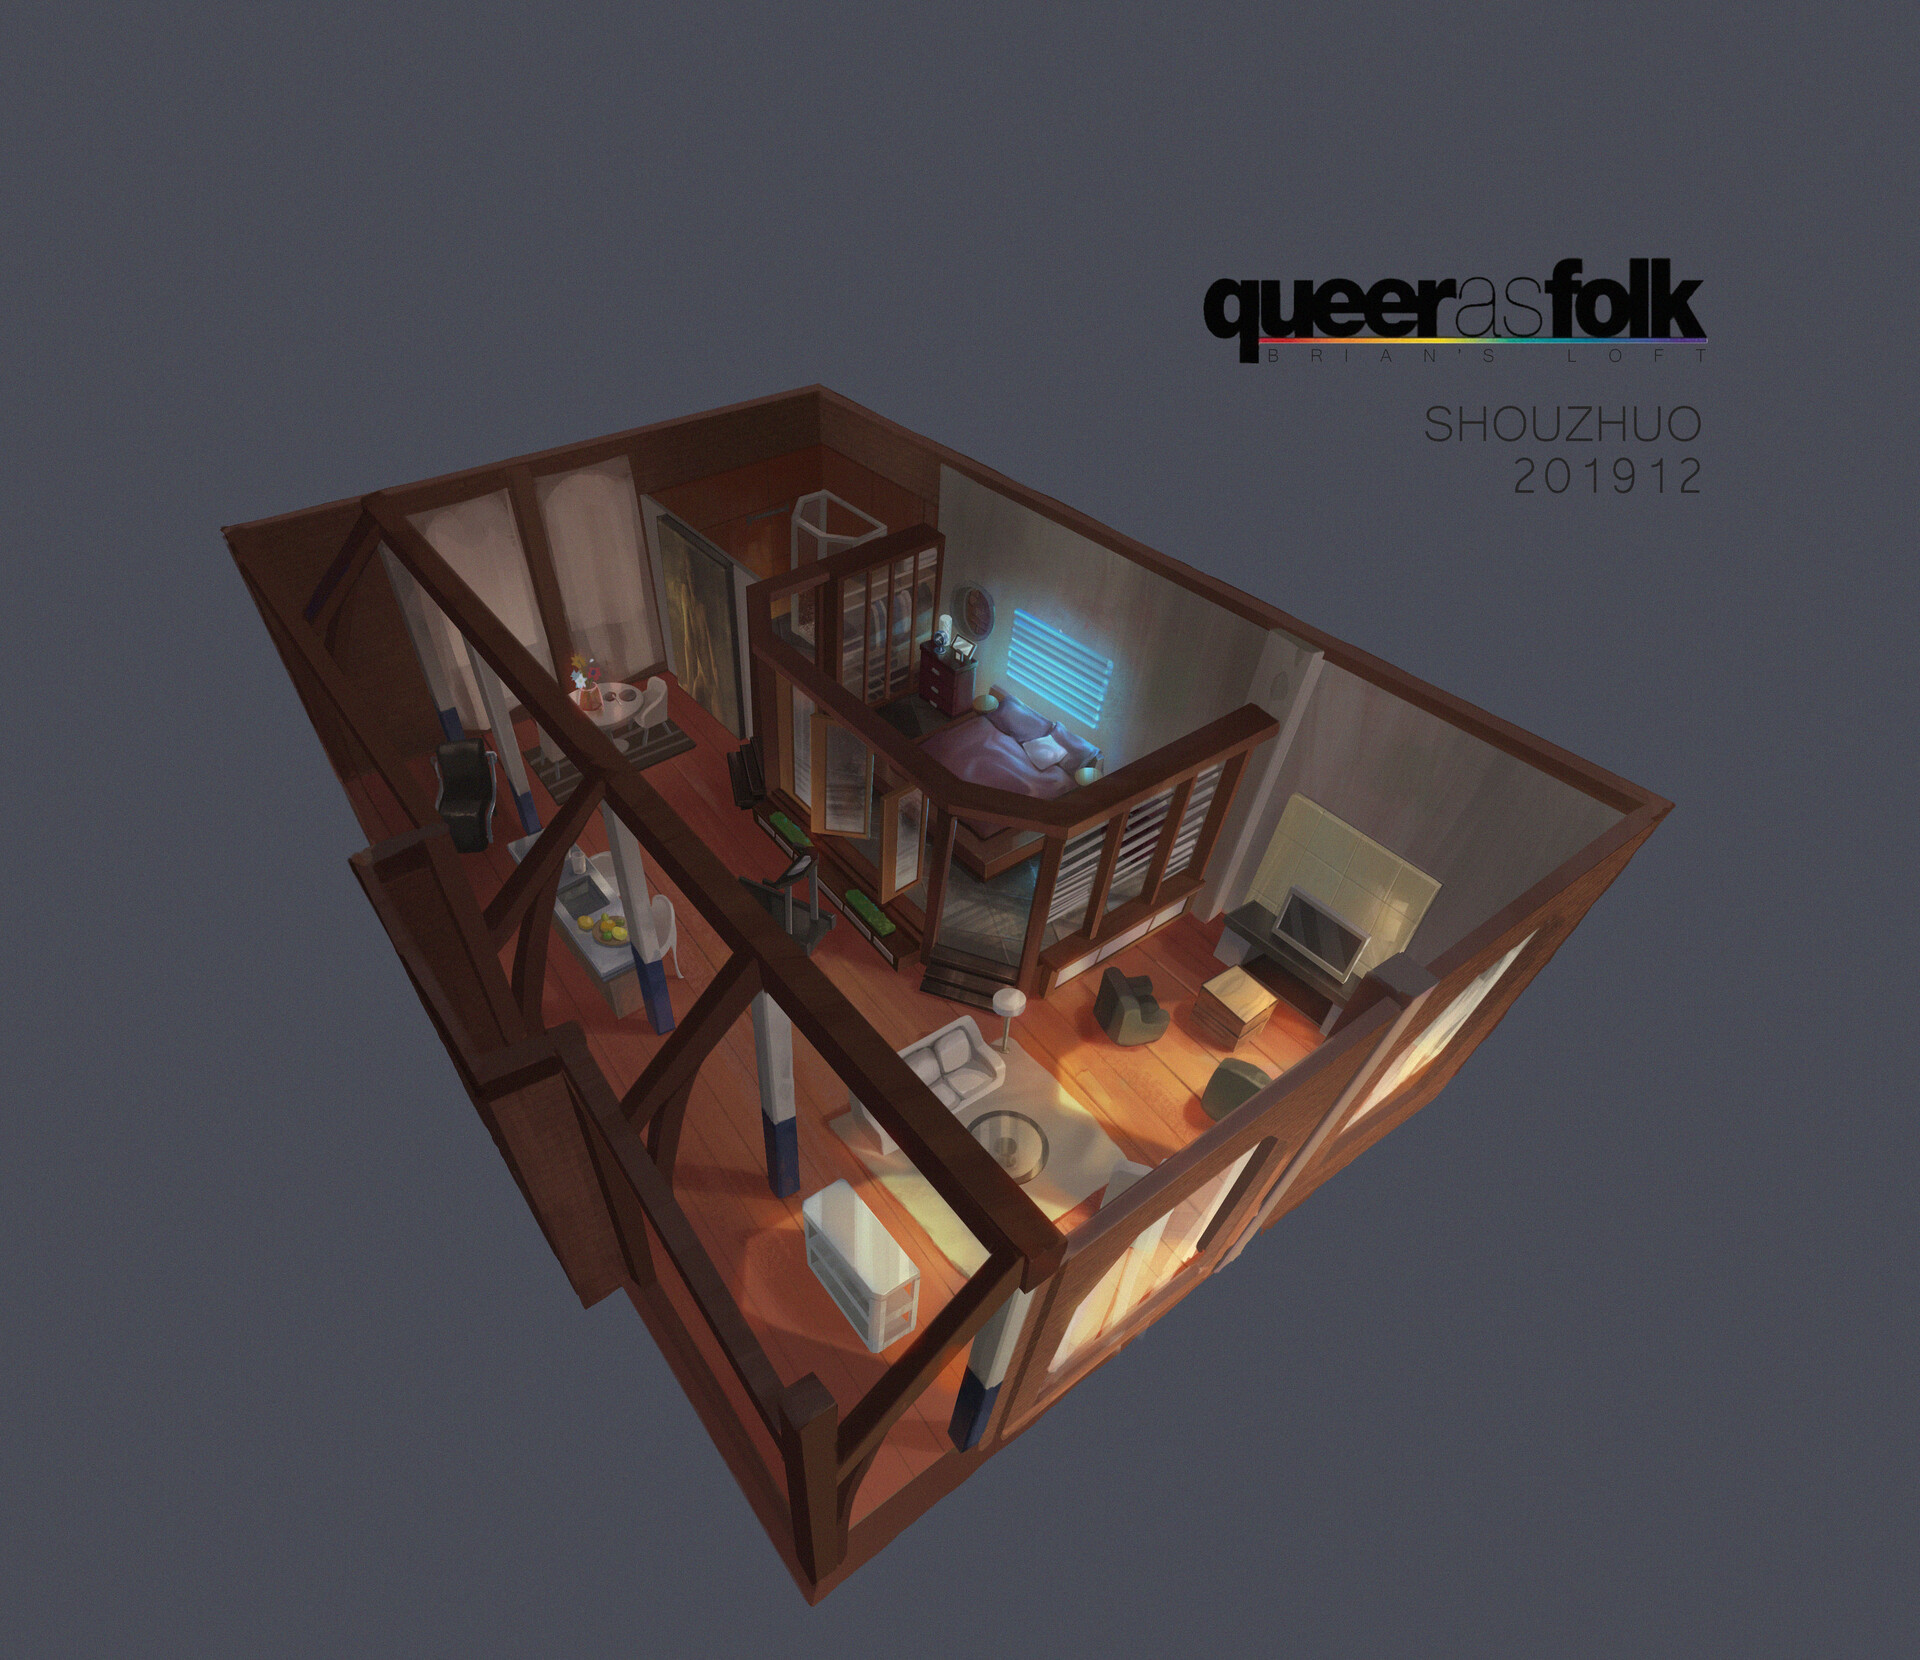 shou zhuo - Queer as Folk Brian's loft